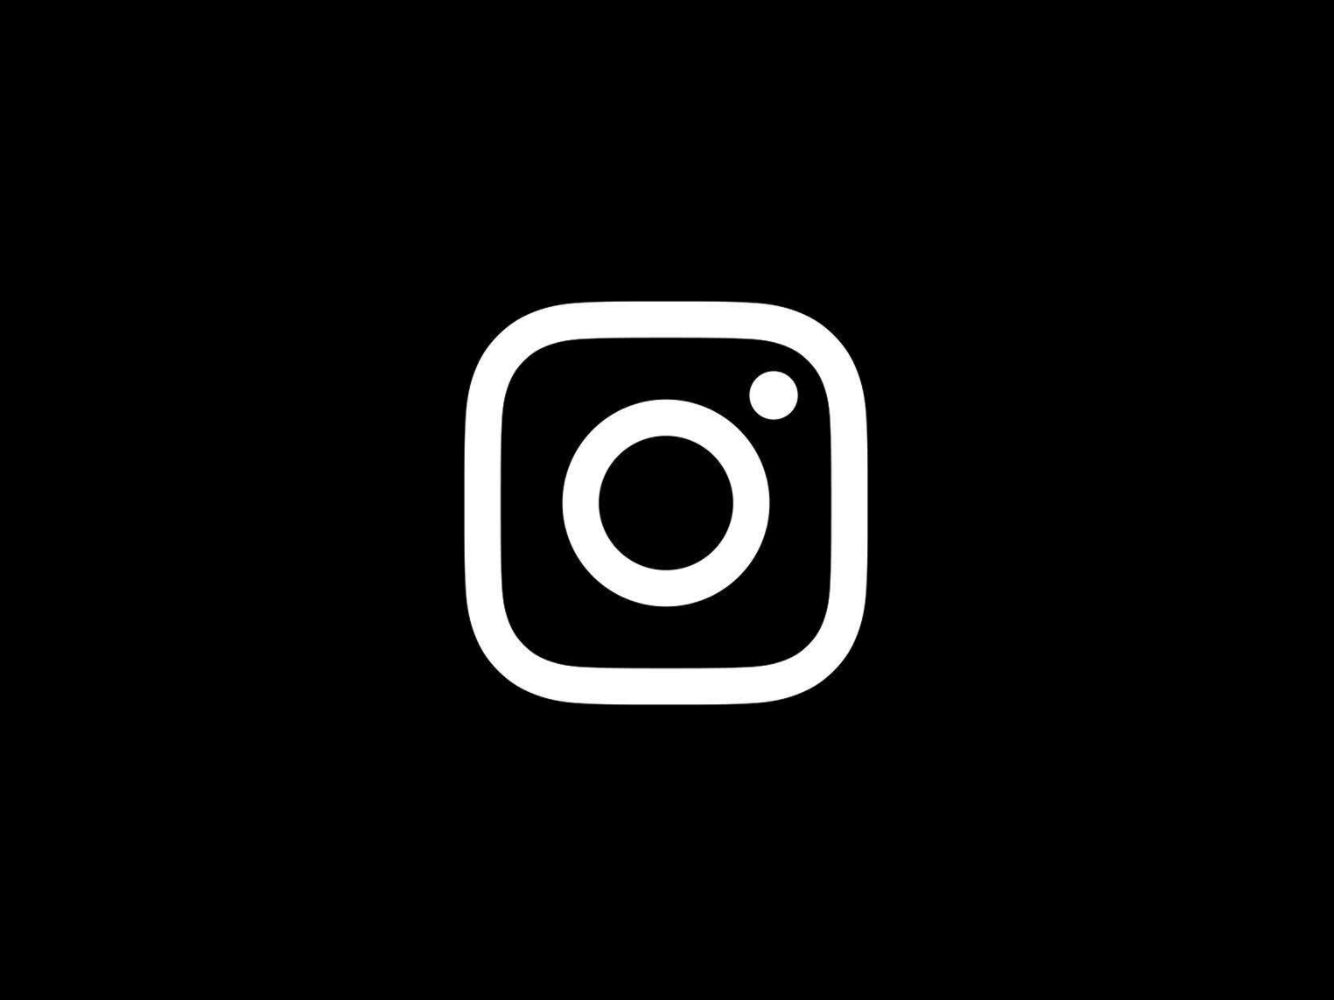 Instagram glyph on black background